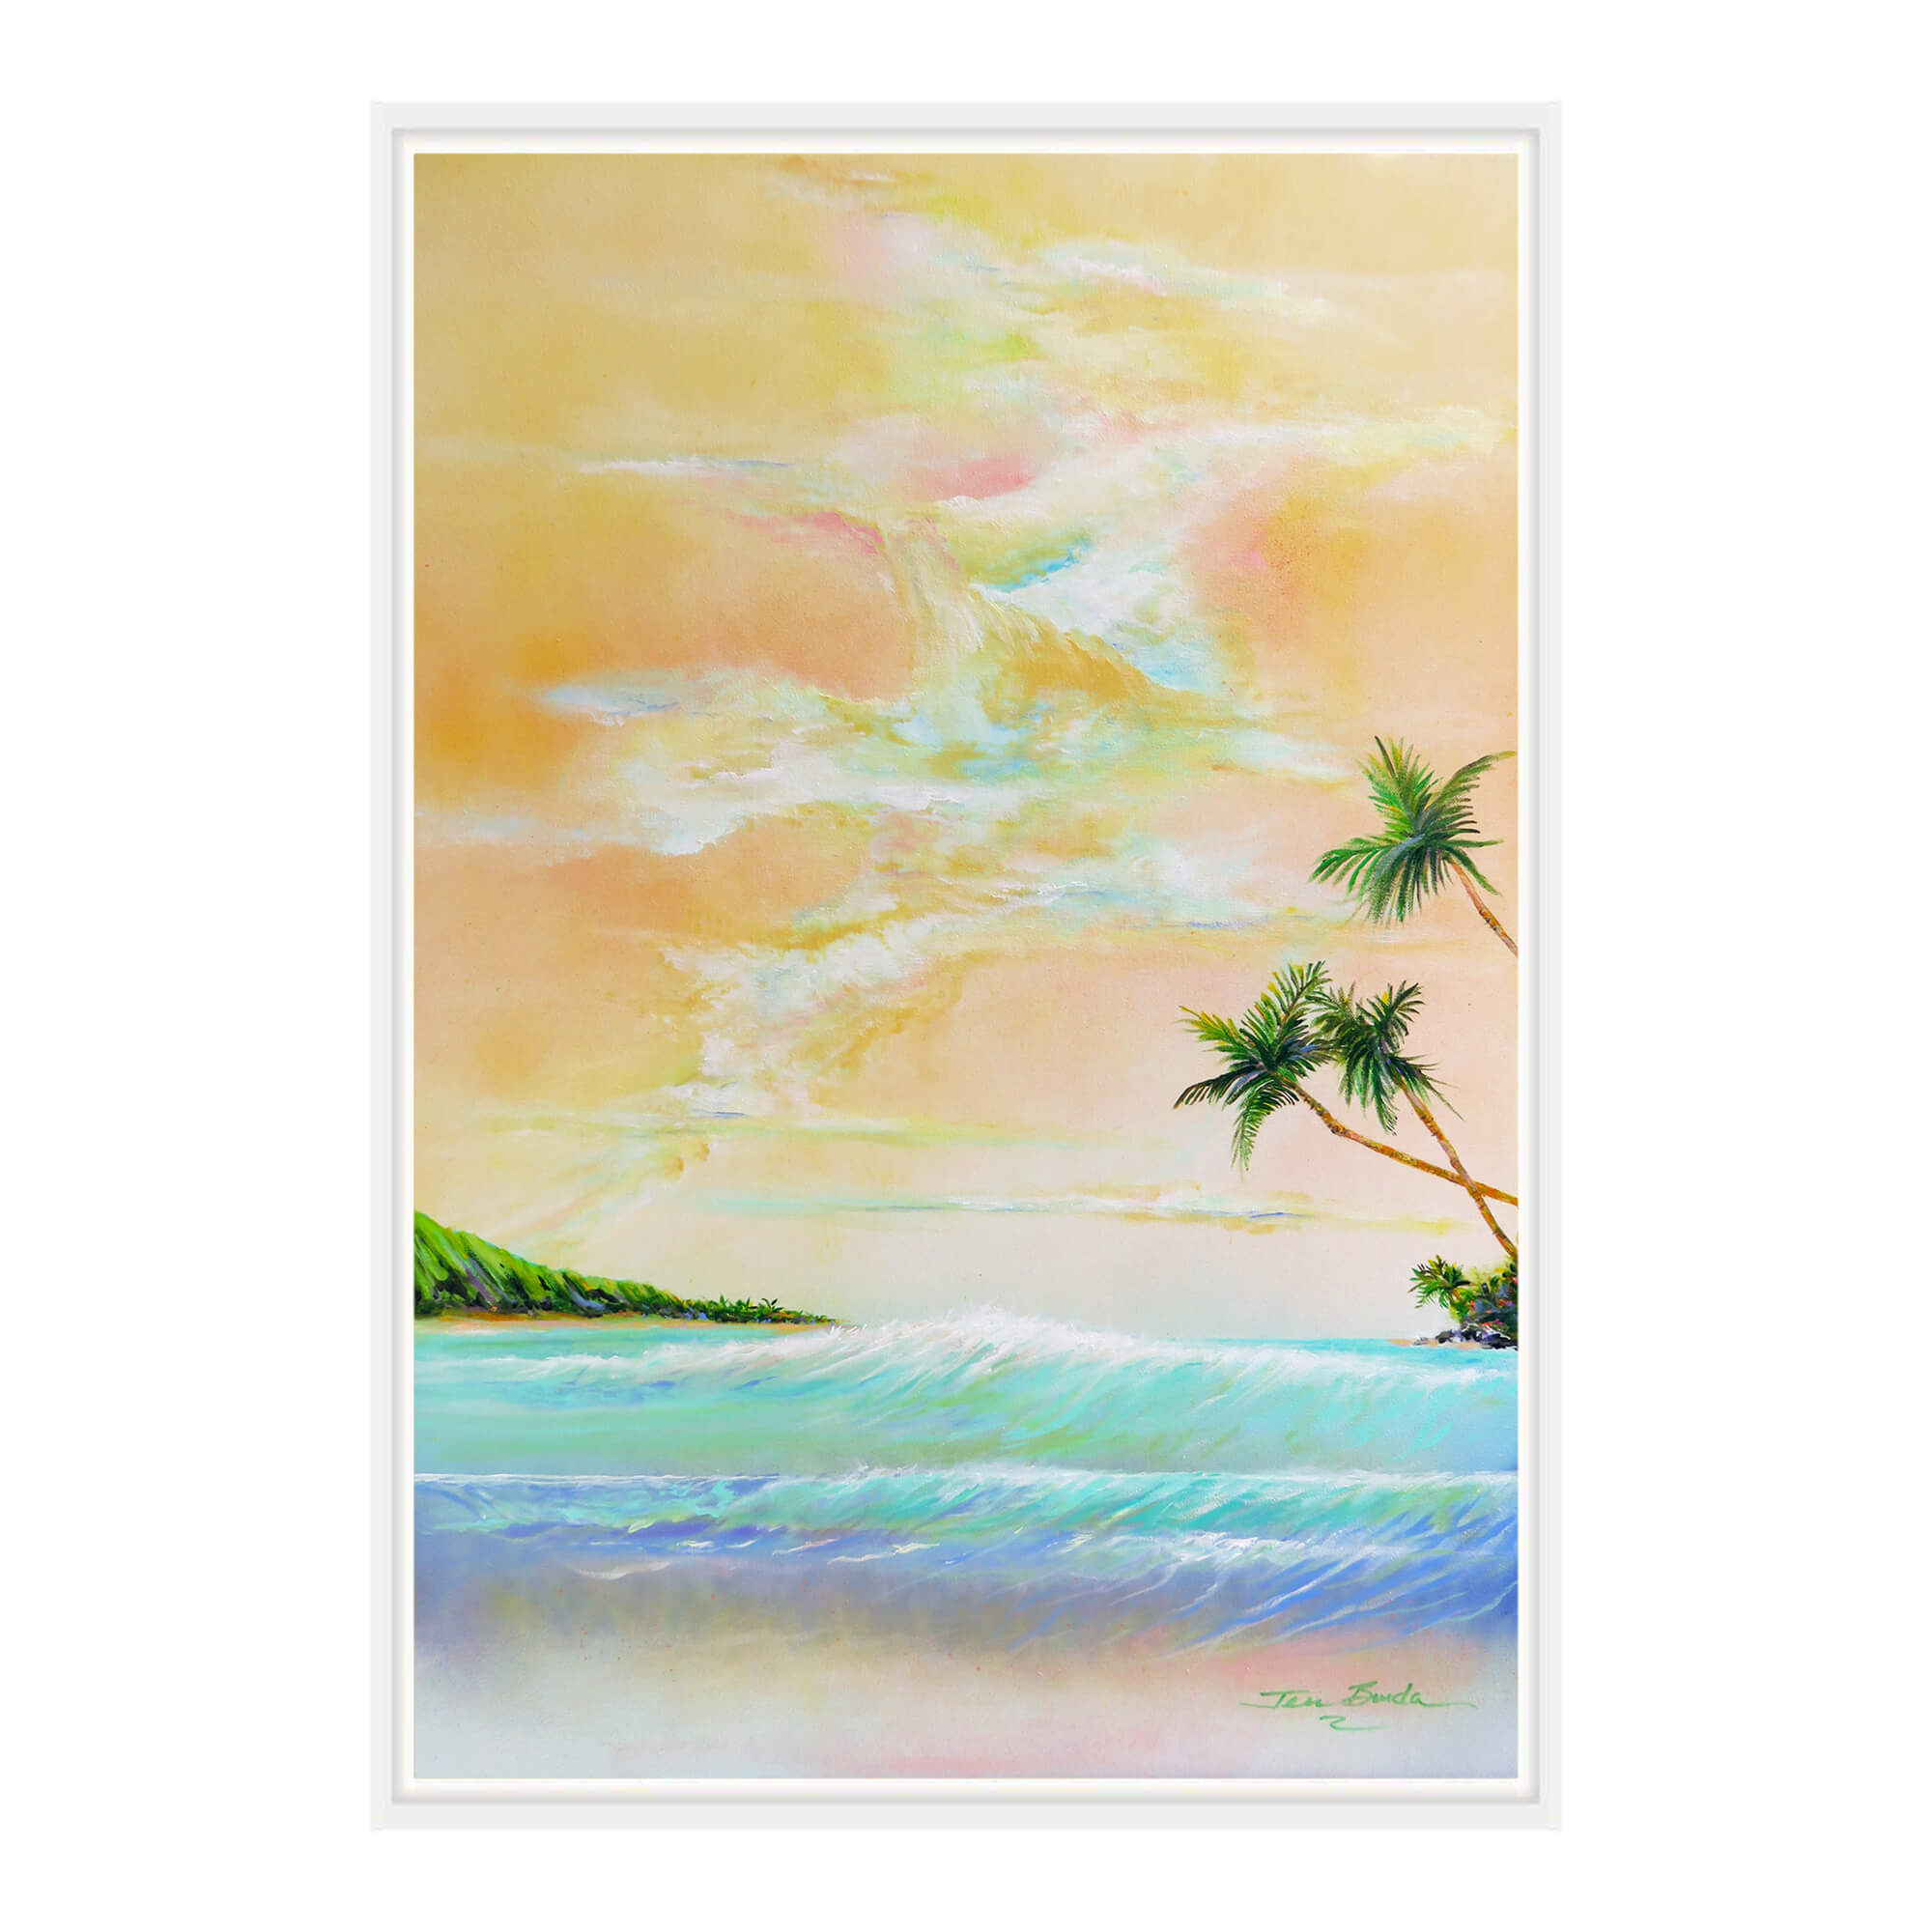 A seascape with large crashing waves by Hawaii artist Jess Burda